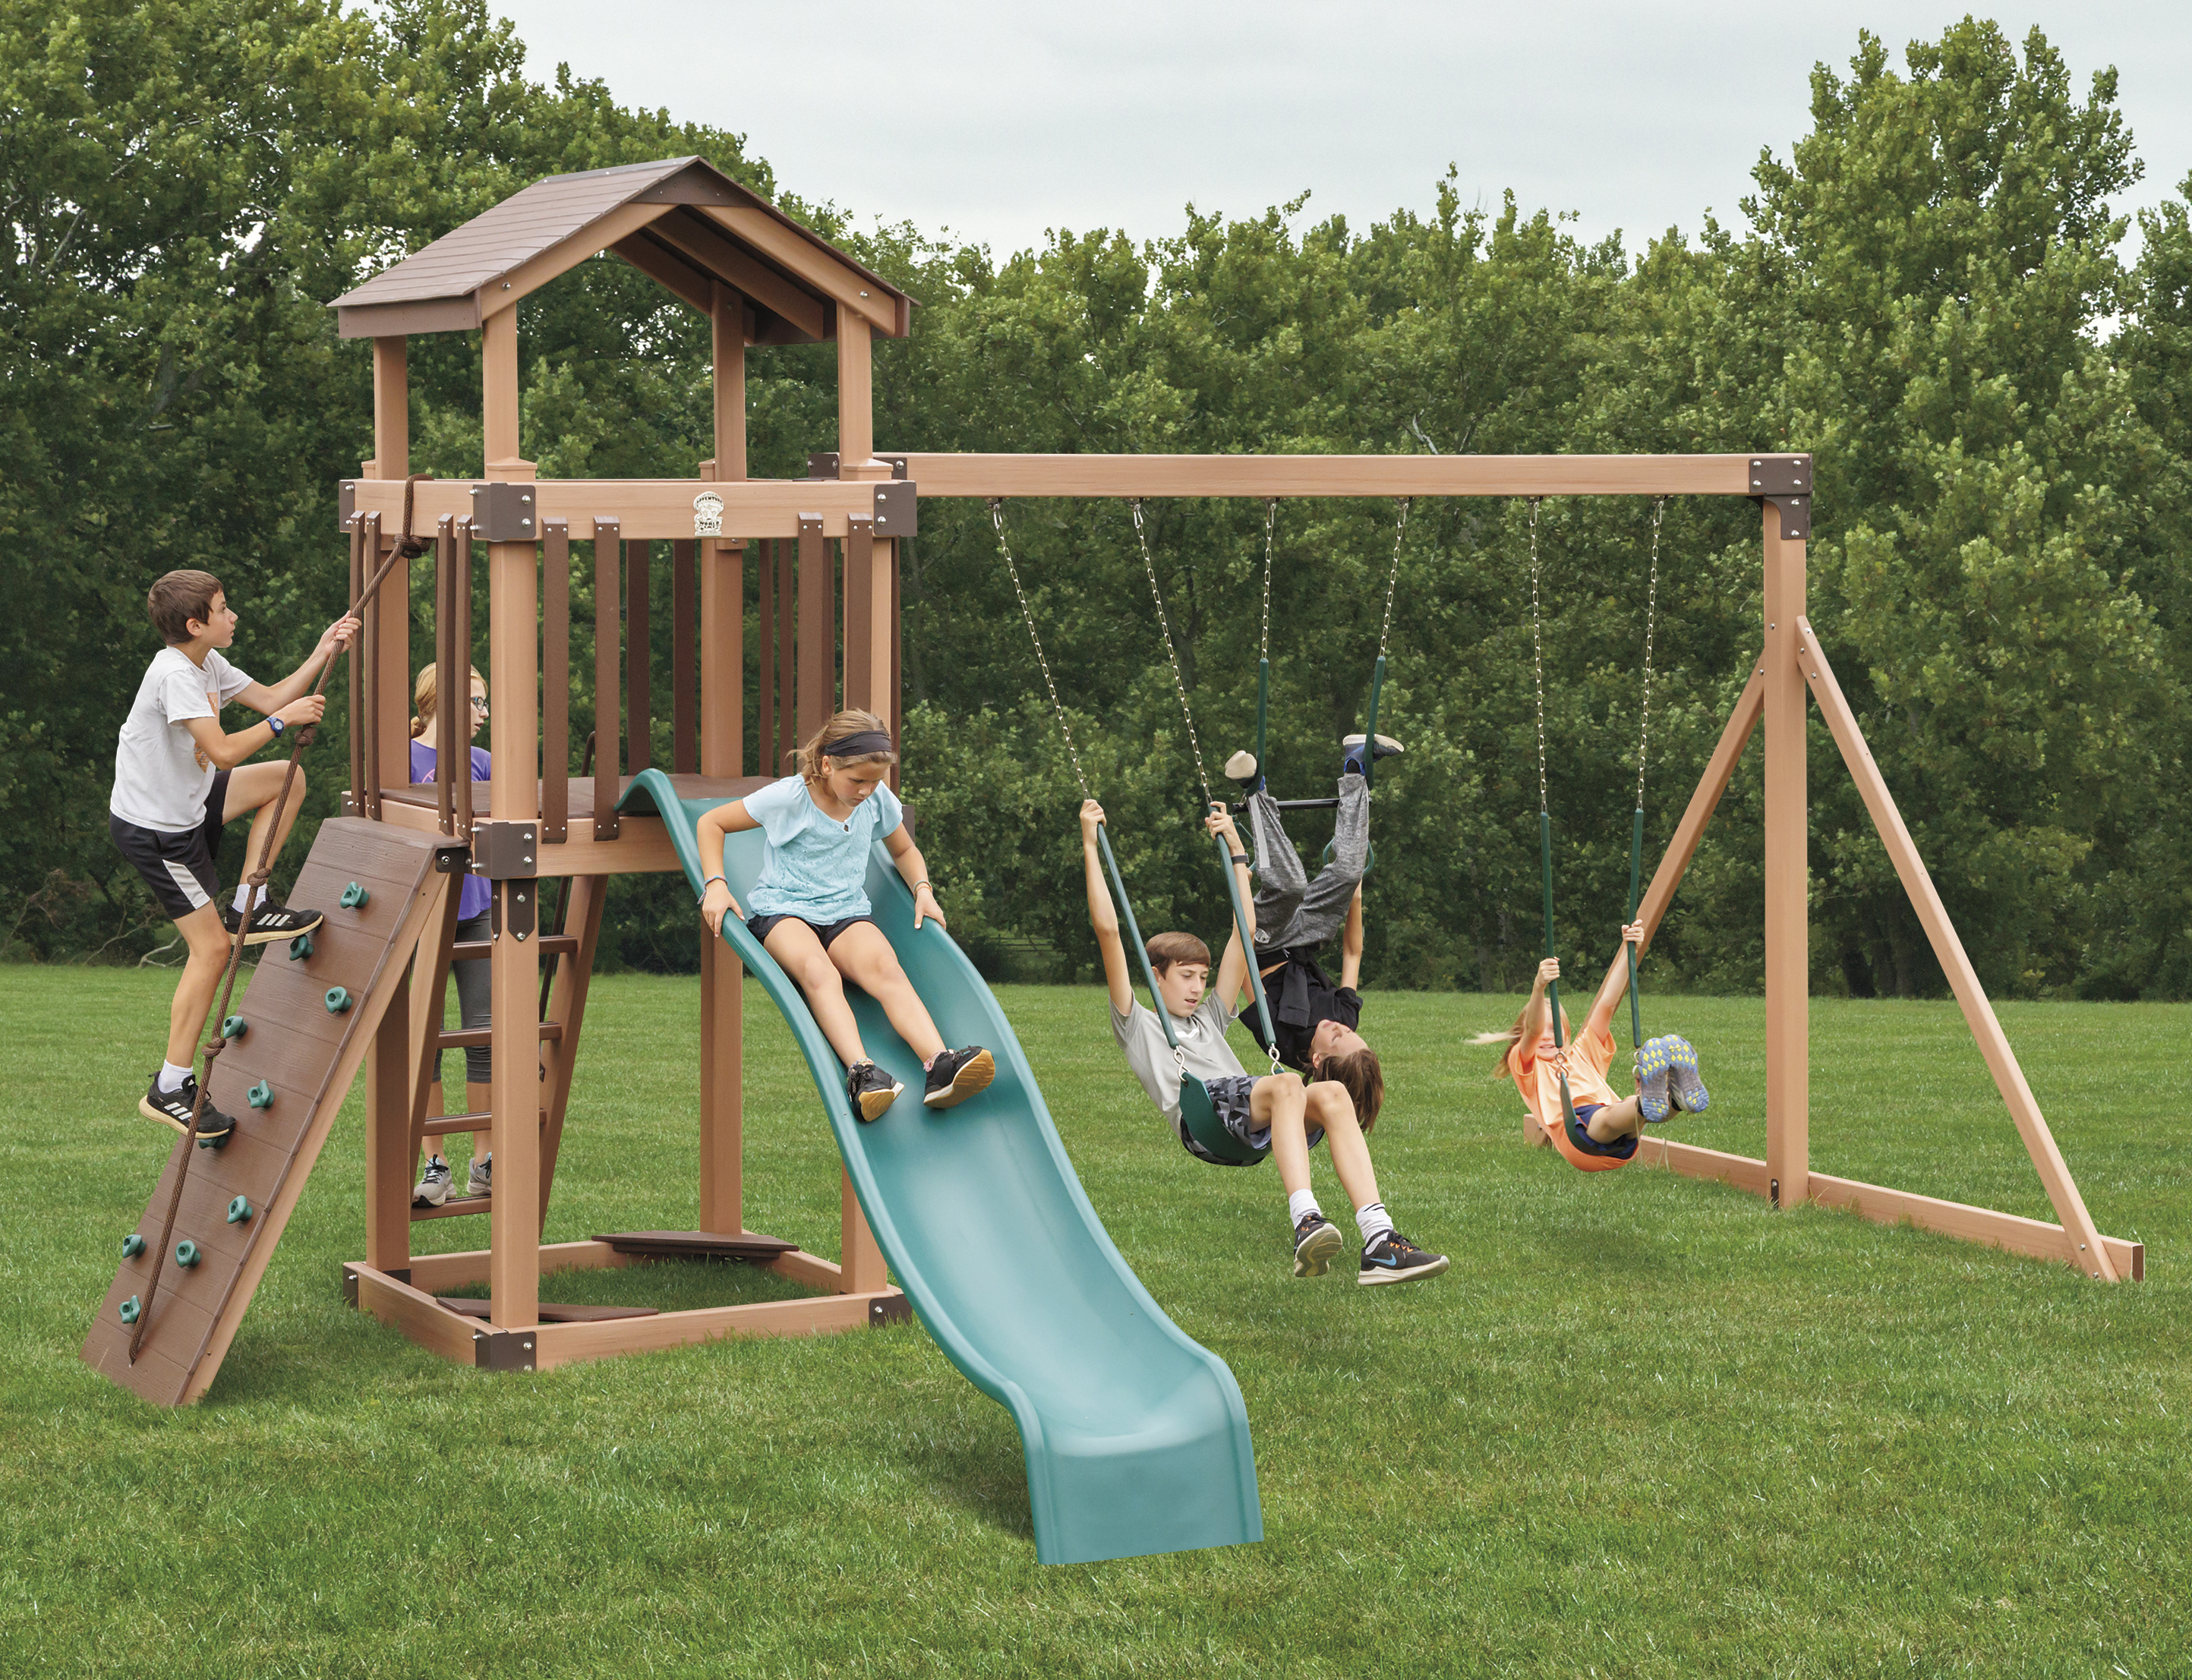 Kids swing set amish built-hershey harrisburg Pa